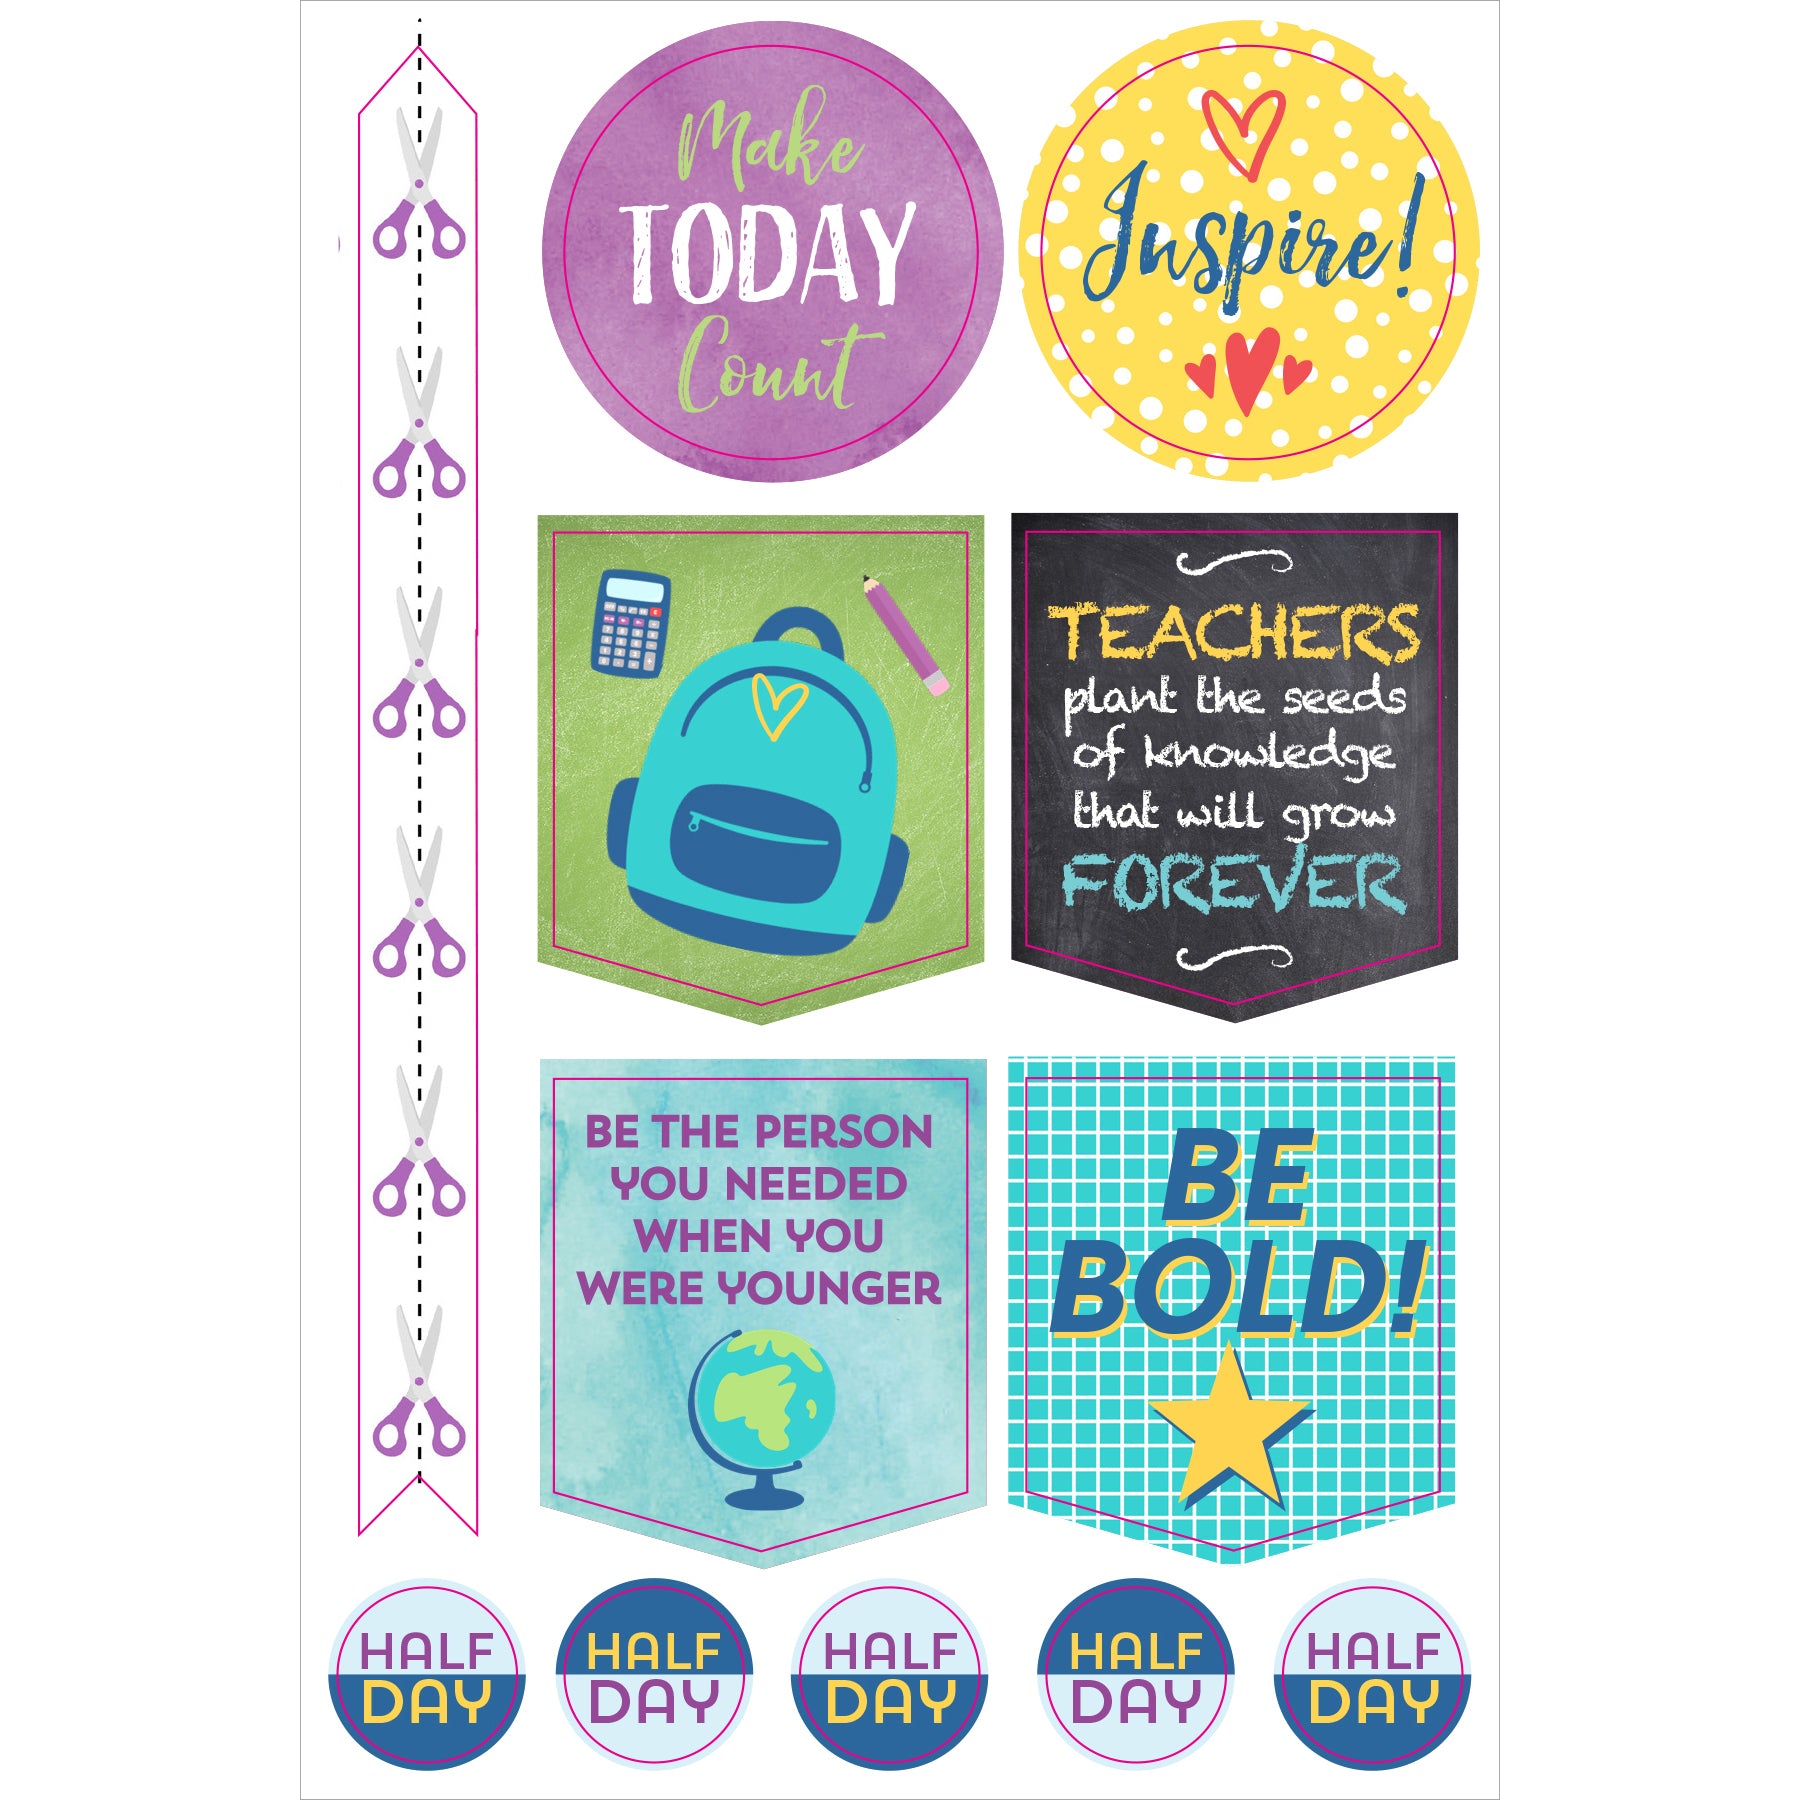 Teacher Planner Stickers - 12 sheets - Paper Kooka